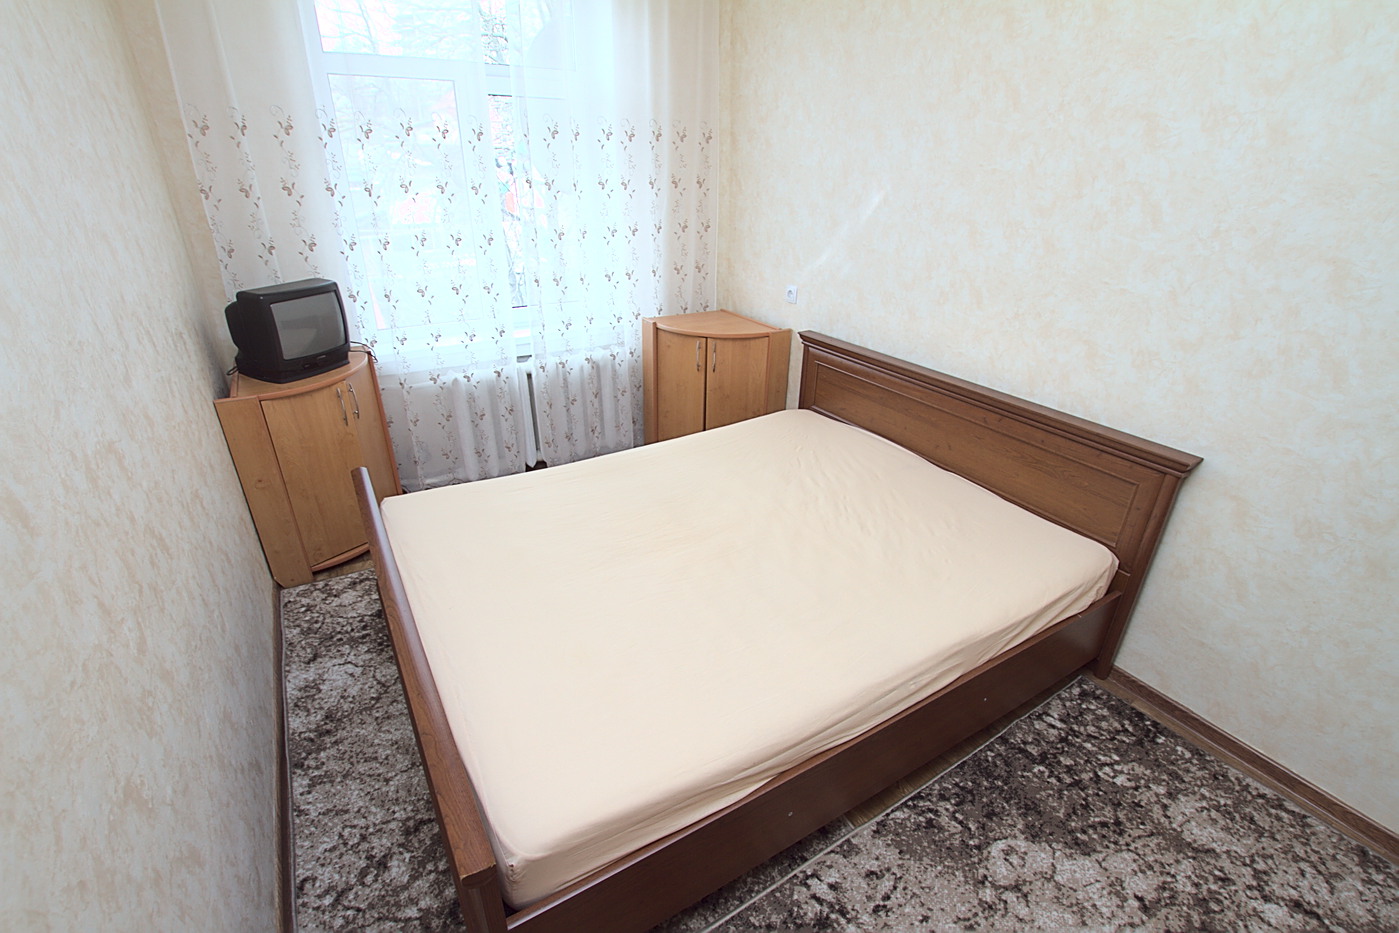 Frumusica Apartment is a 1 room apartment for rent in Chisinau, Moldova